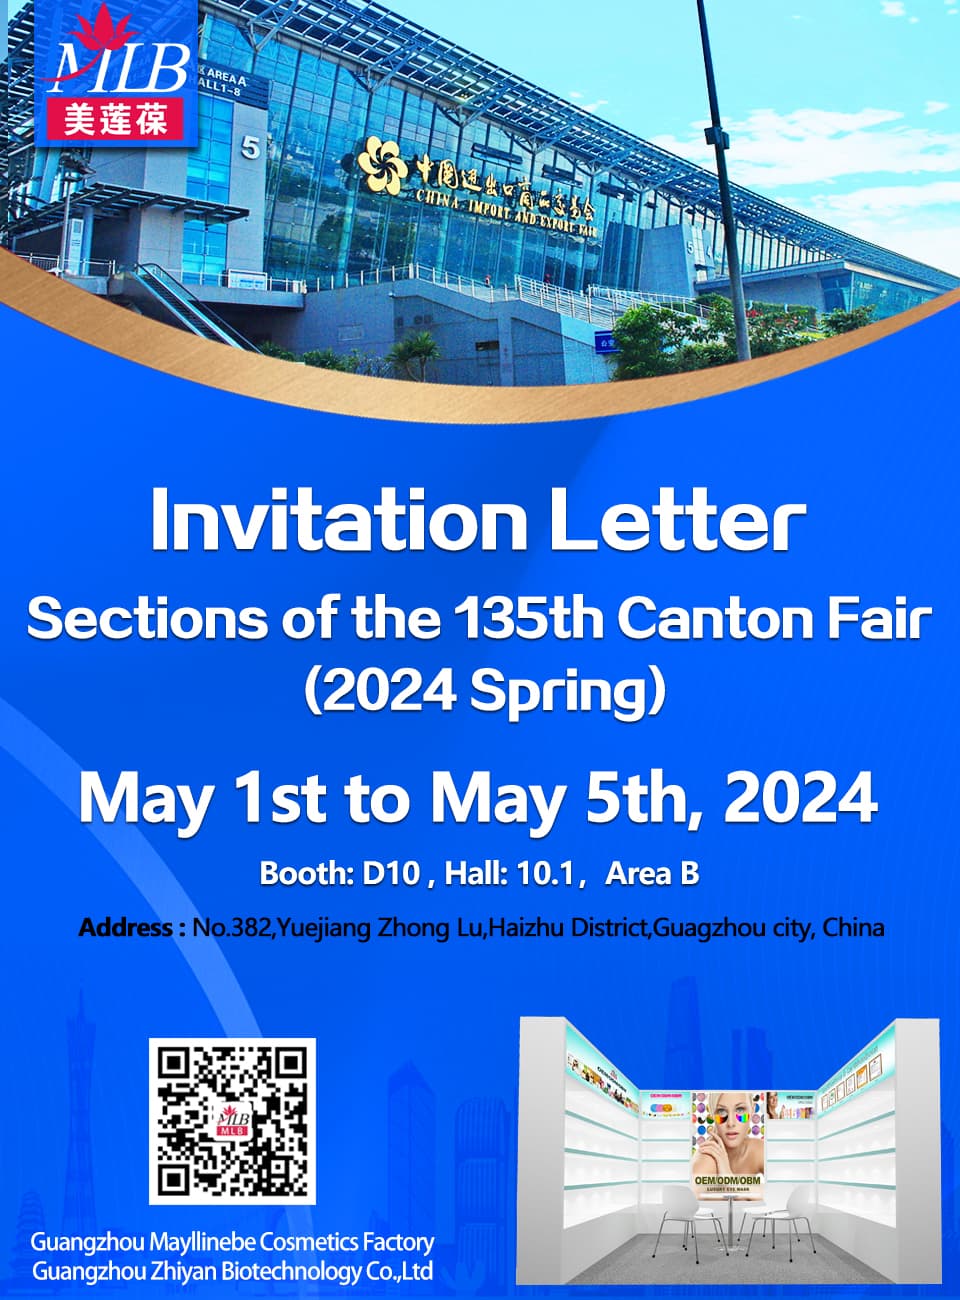 Mayllinebe nimmt an der 135. Canton Fair teil (Frühjahr 2024)